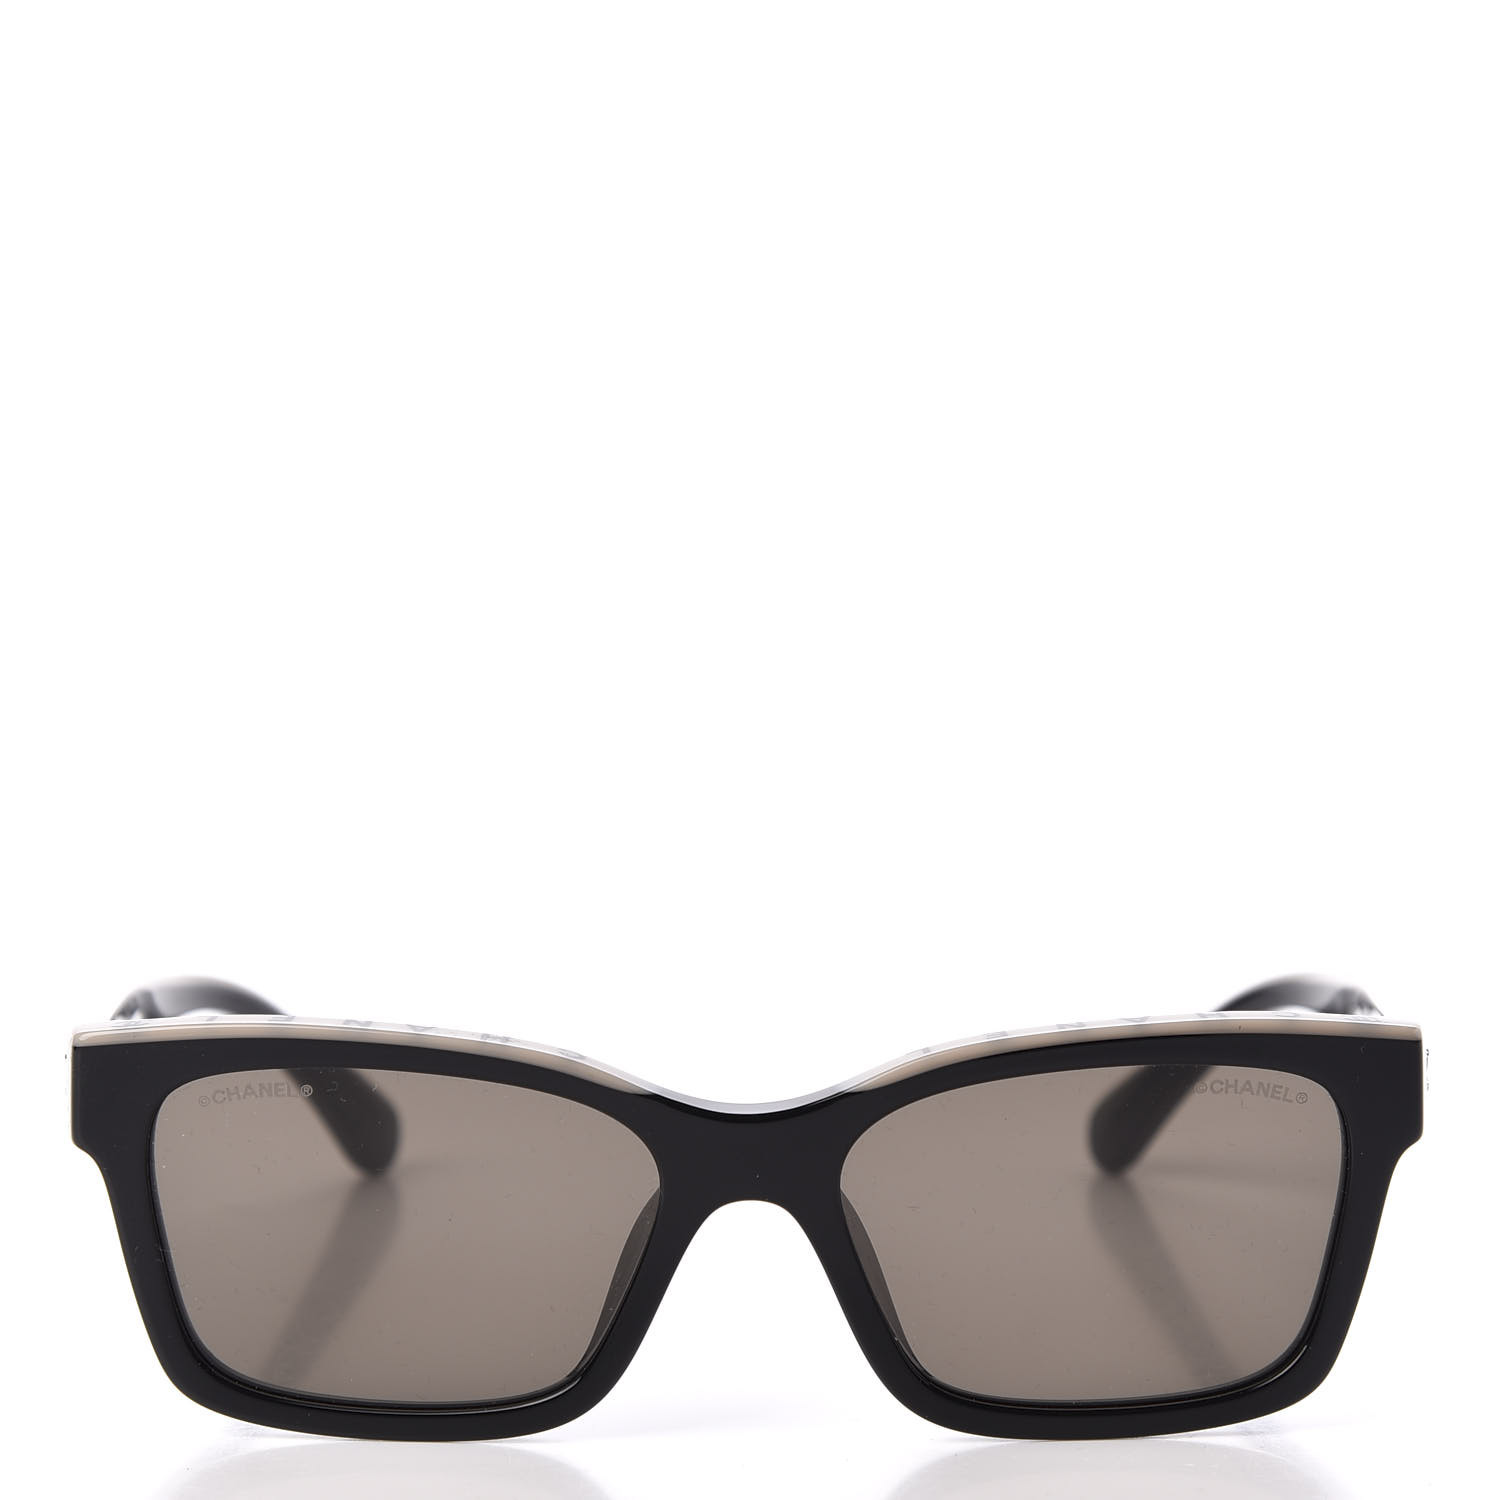 CHANEL Acetate Square Sunglasses 5417-A Black 667500 | FASHIONPHILE